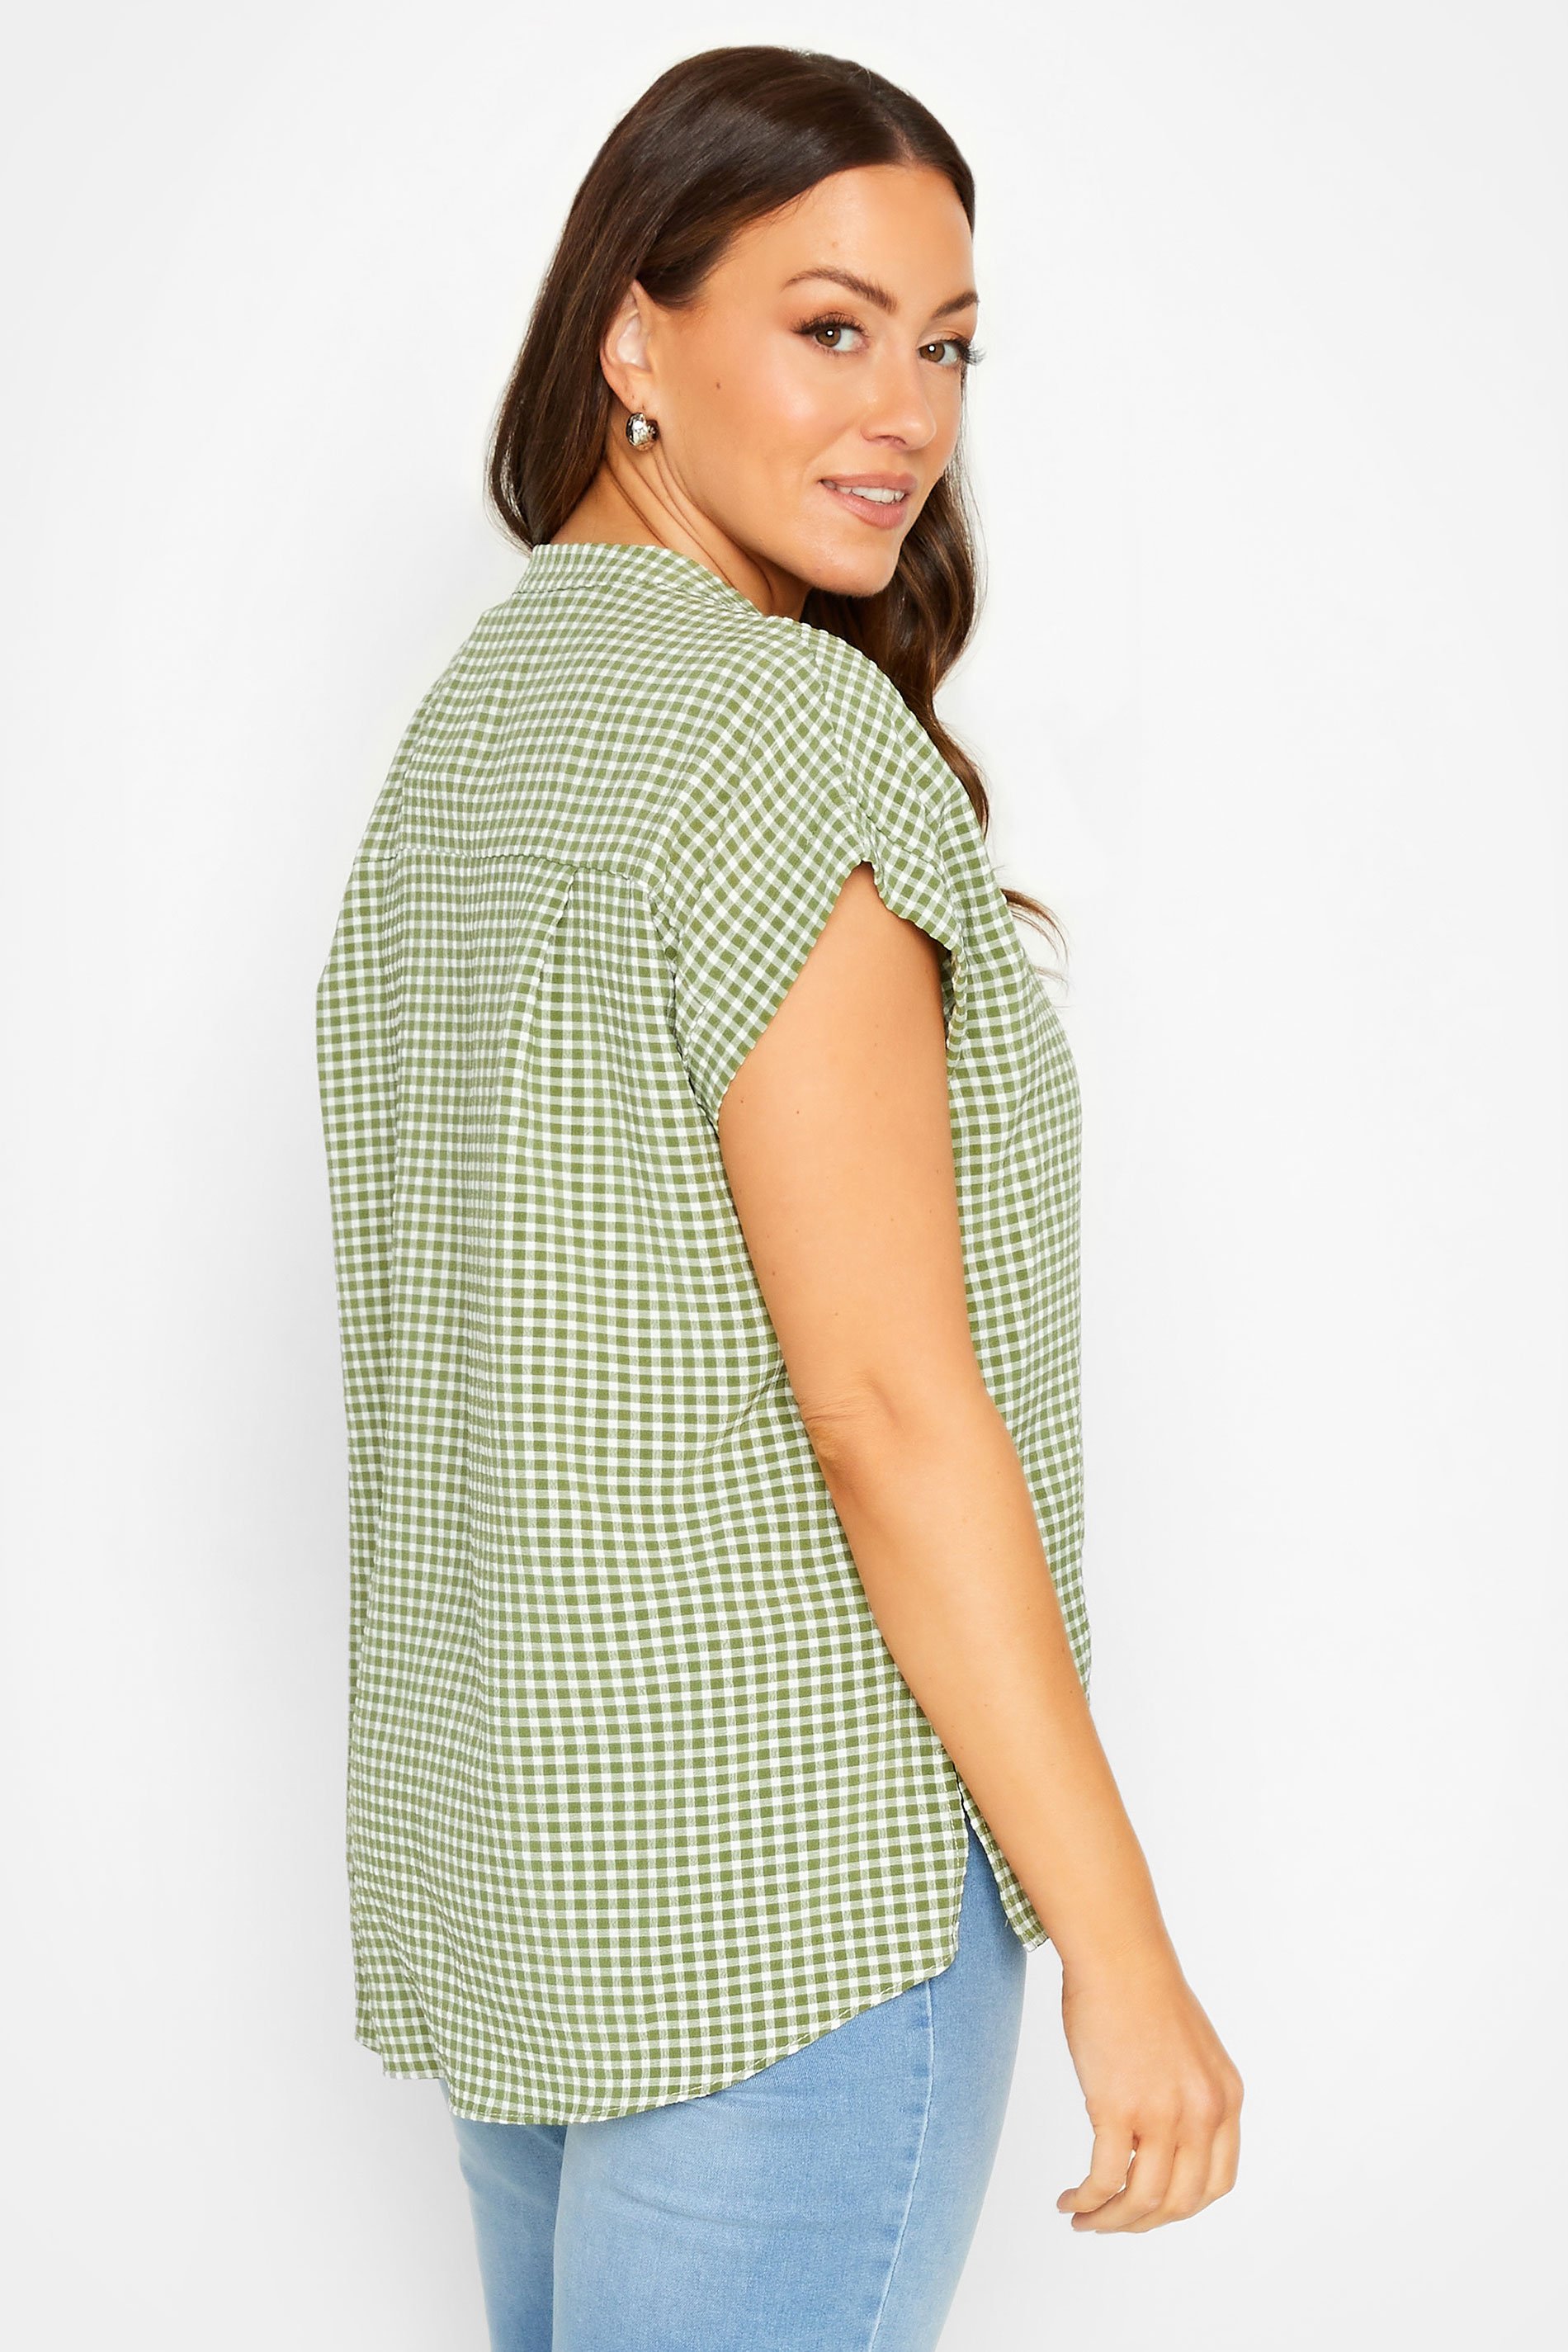 M&Co Khaki Green Gingham Short Sleeve Shirt | M&Co 3